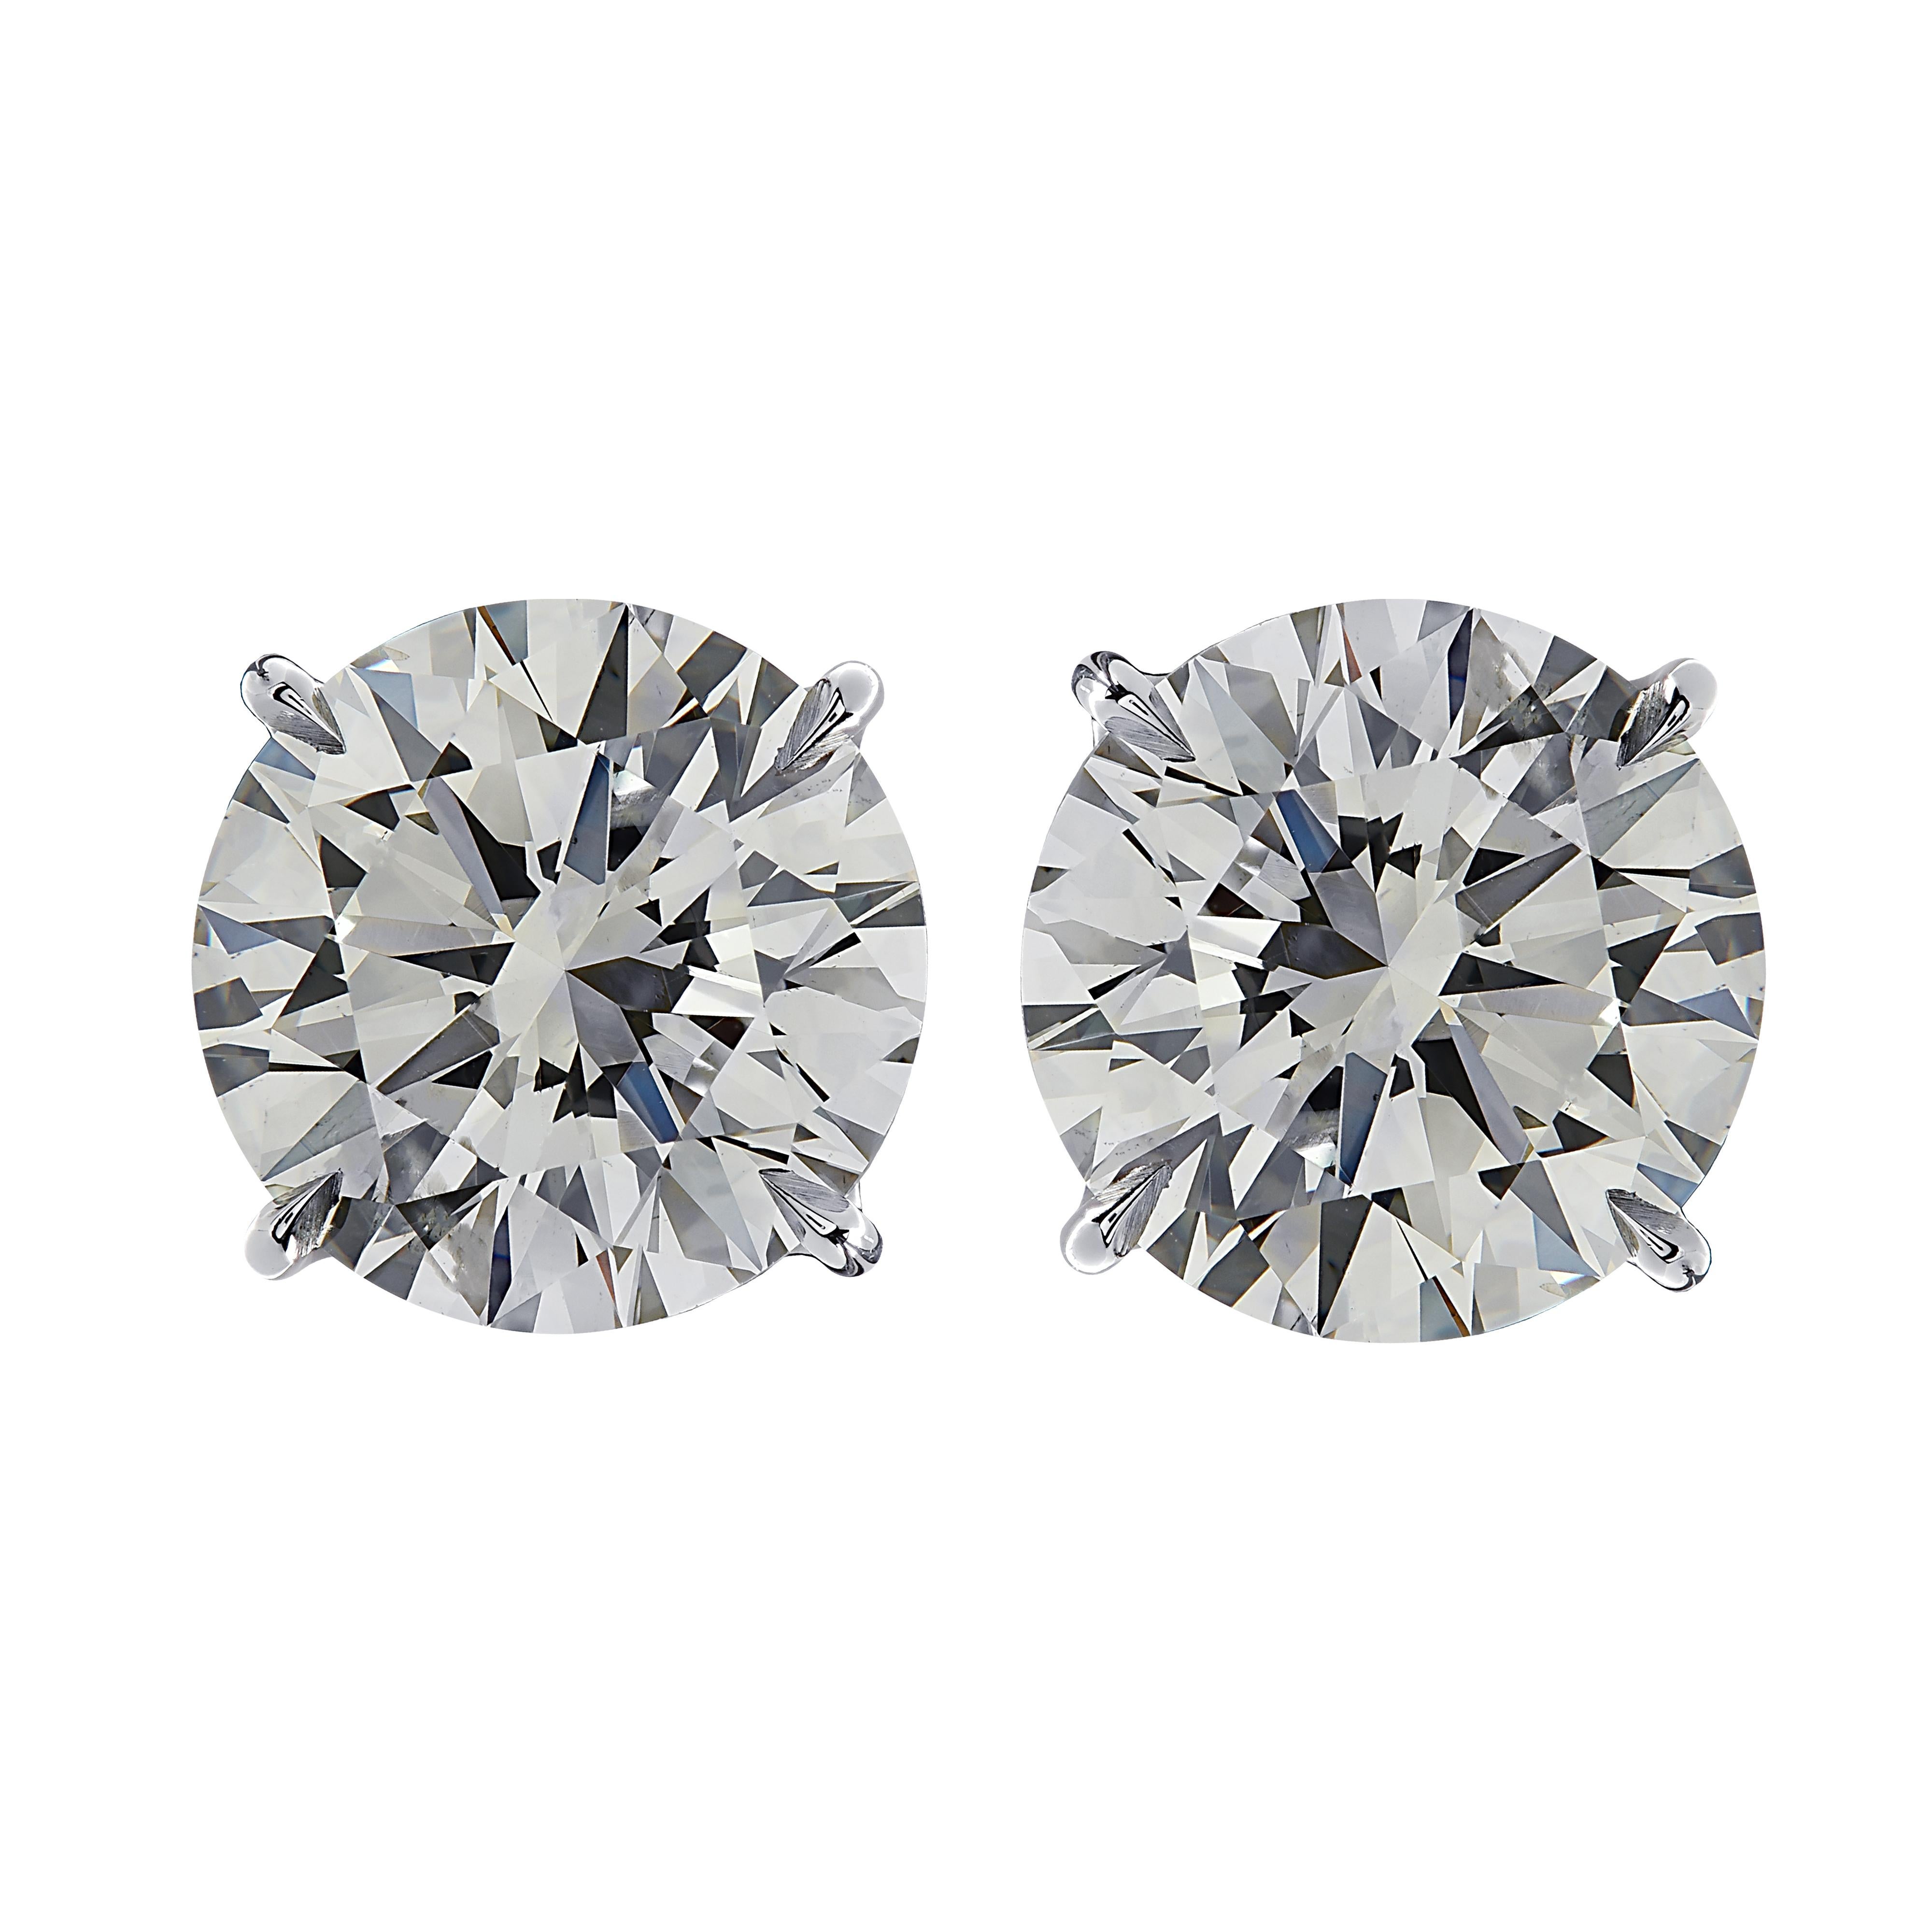 Modern Vivid Diamonds GIA Certified 4.01 Carat Diamond Solitaire Stud Earrings